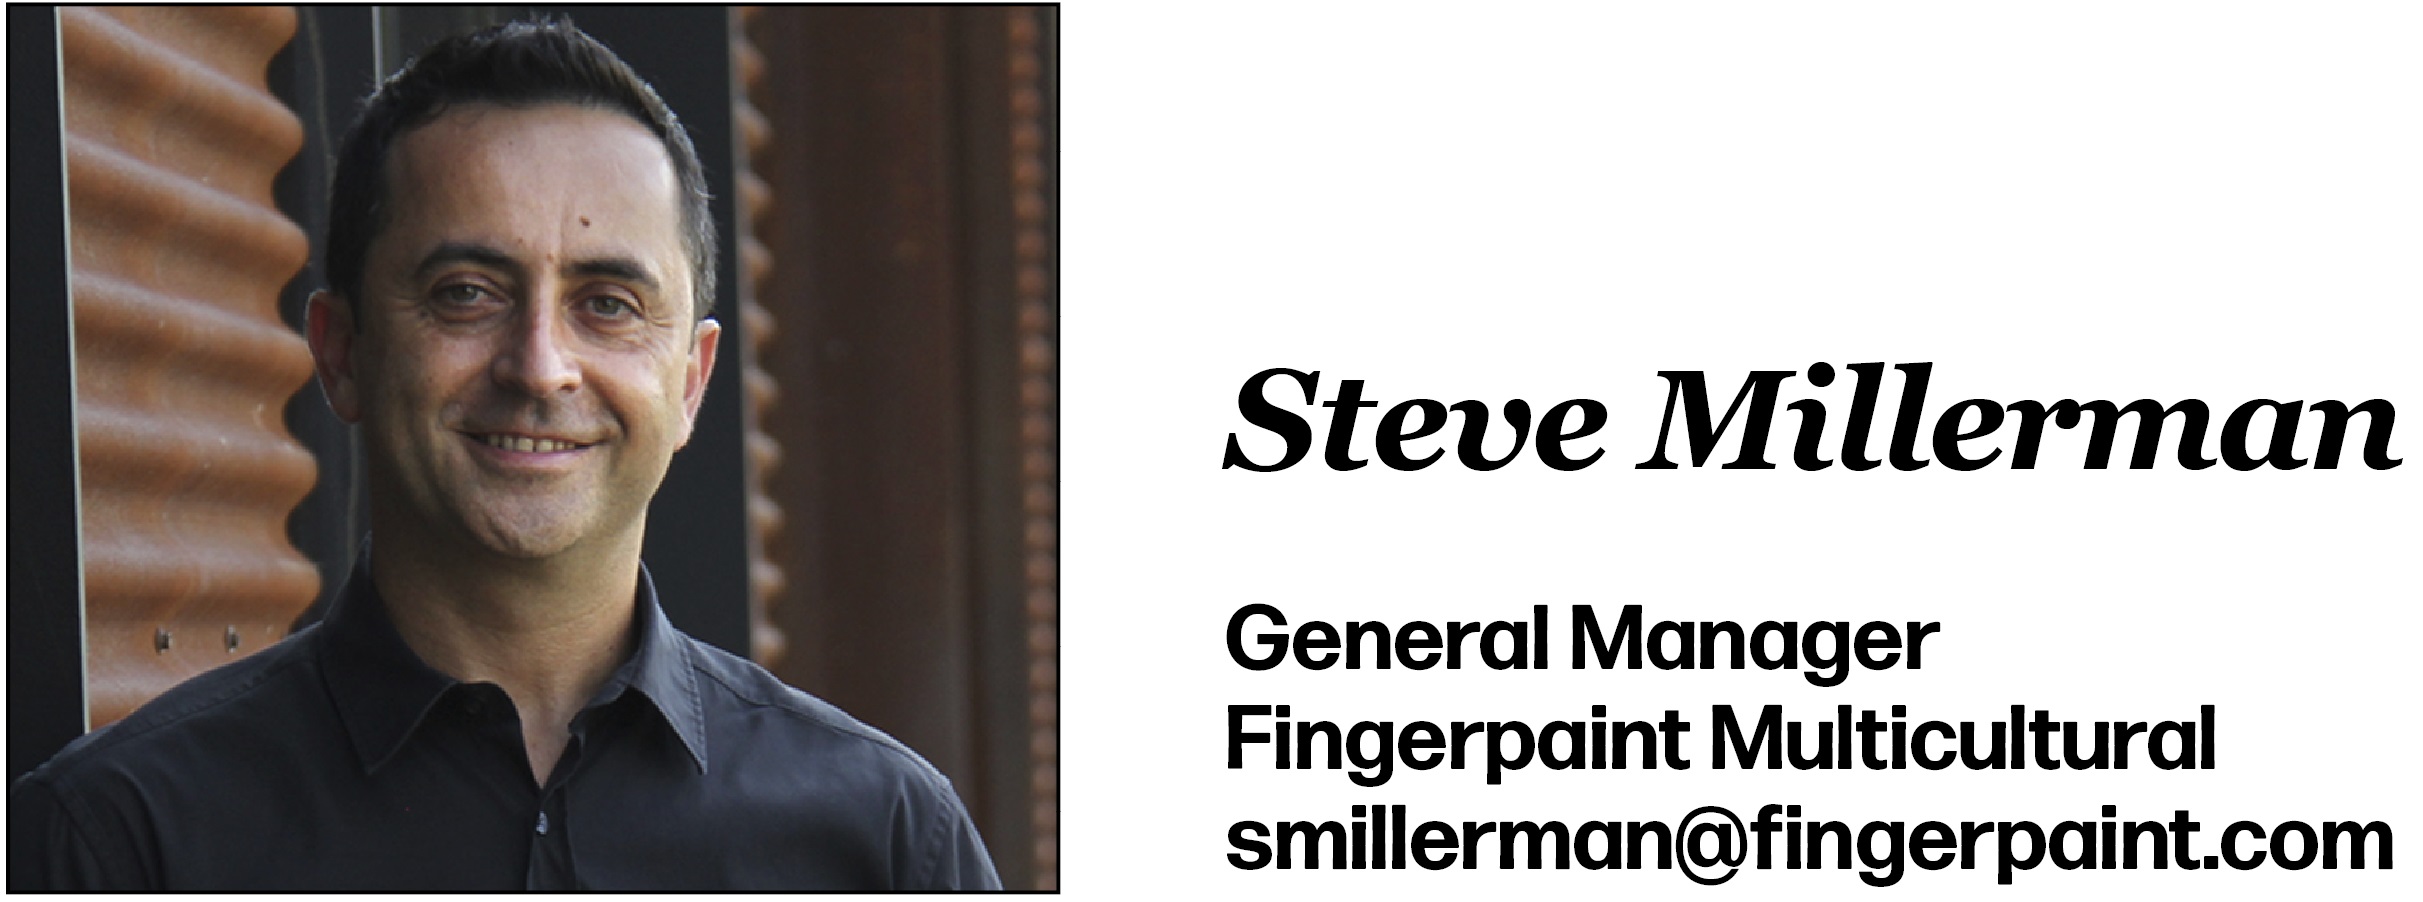 Steve Millerman General Manager Fingerpaint Multicultural smillerman@fingerpaint.com